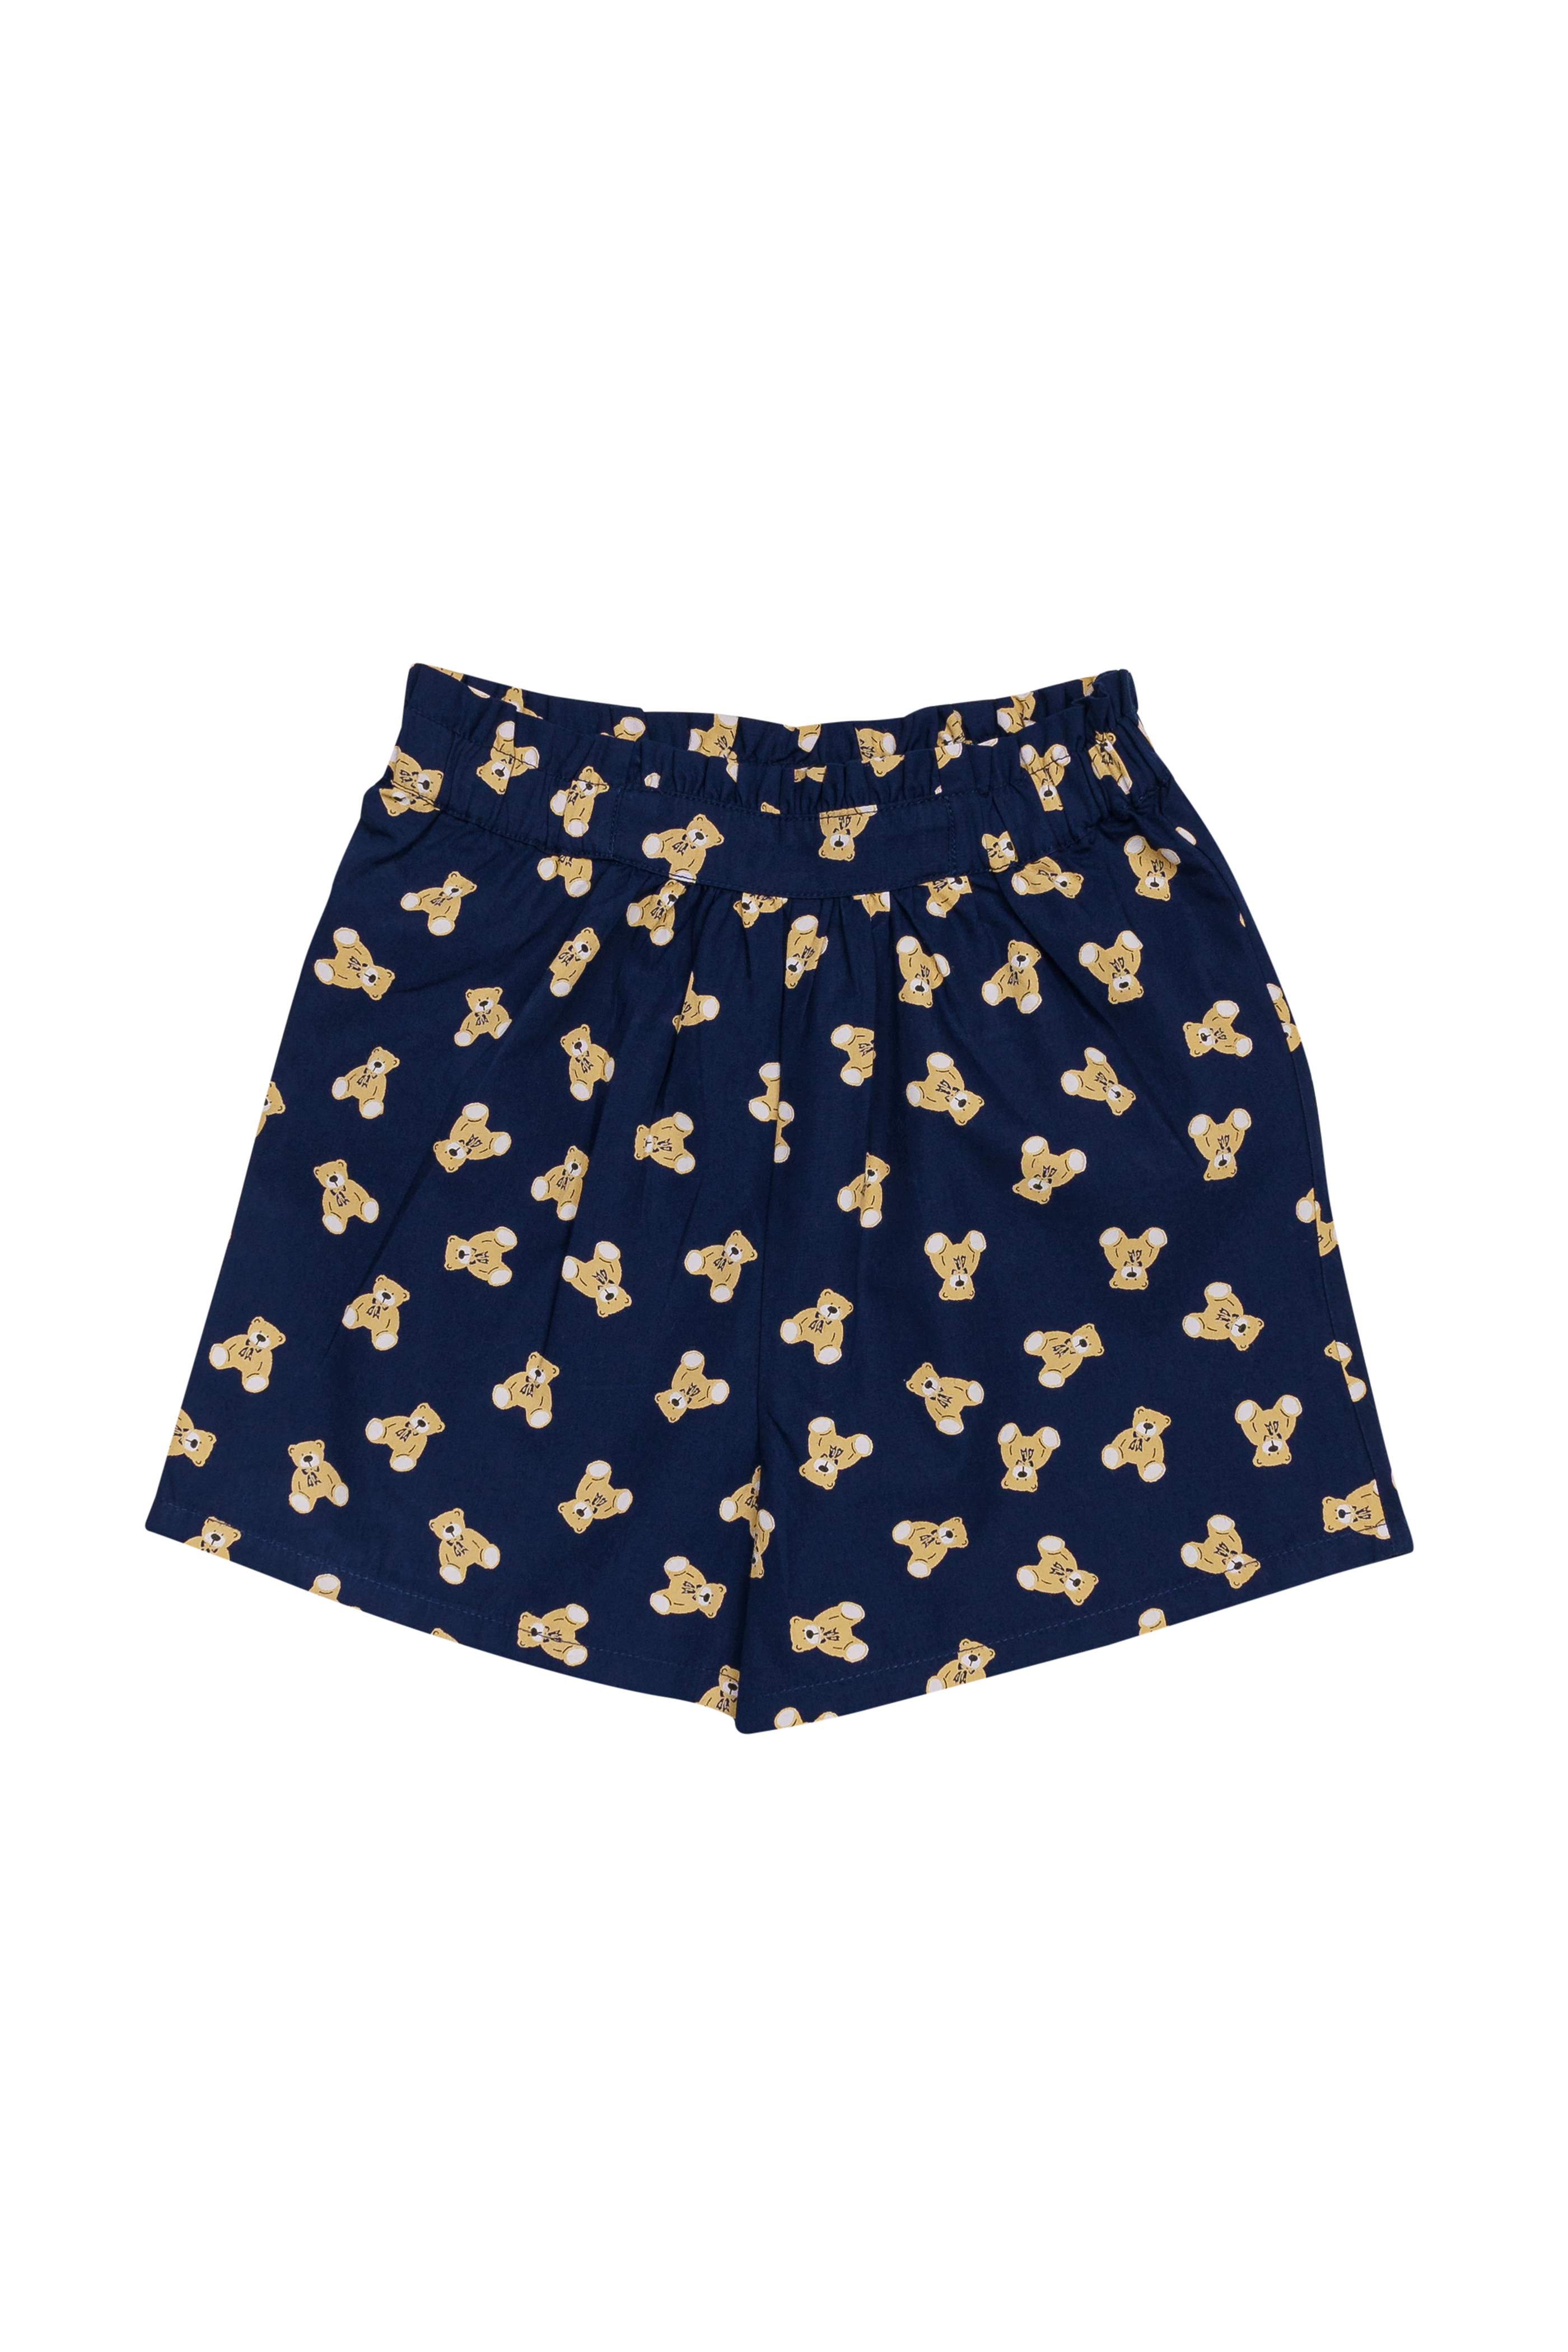 H by Hamleys Infant Girls Printed Navy Shorts